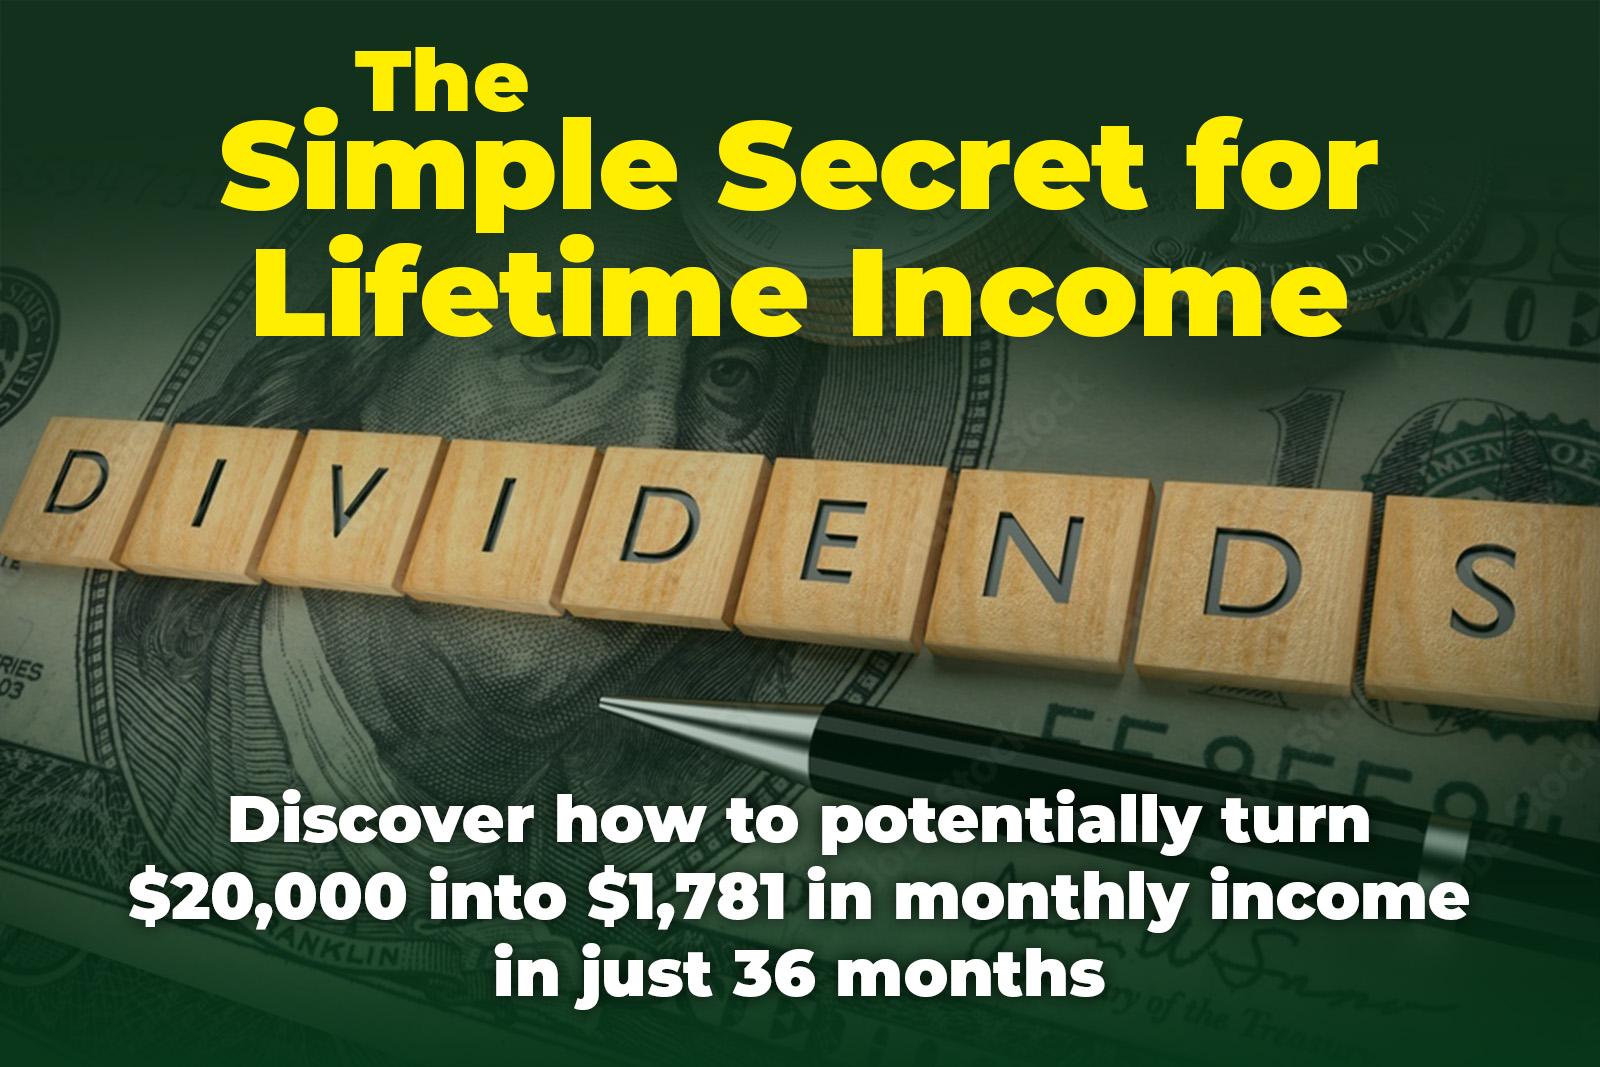 The Simple Secret for Lifetime Income